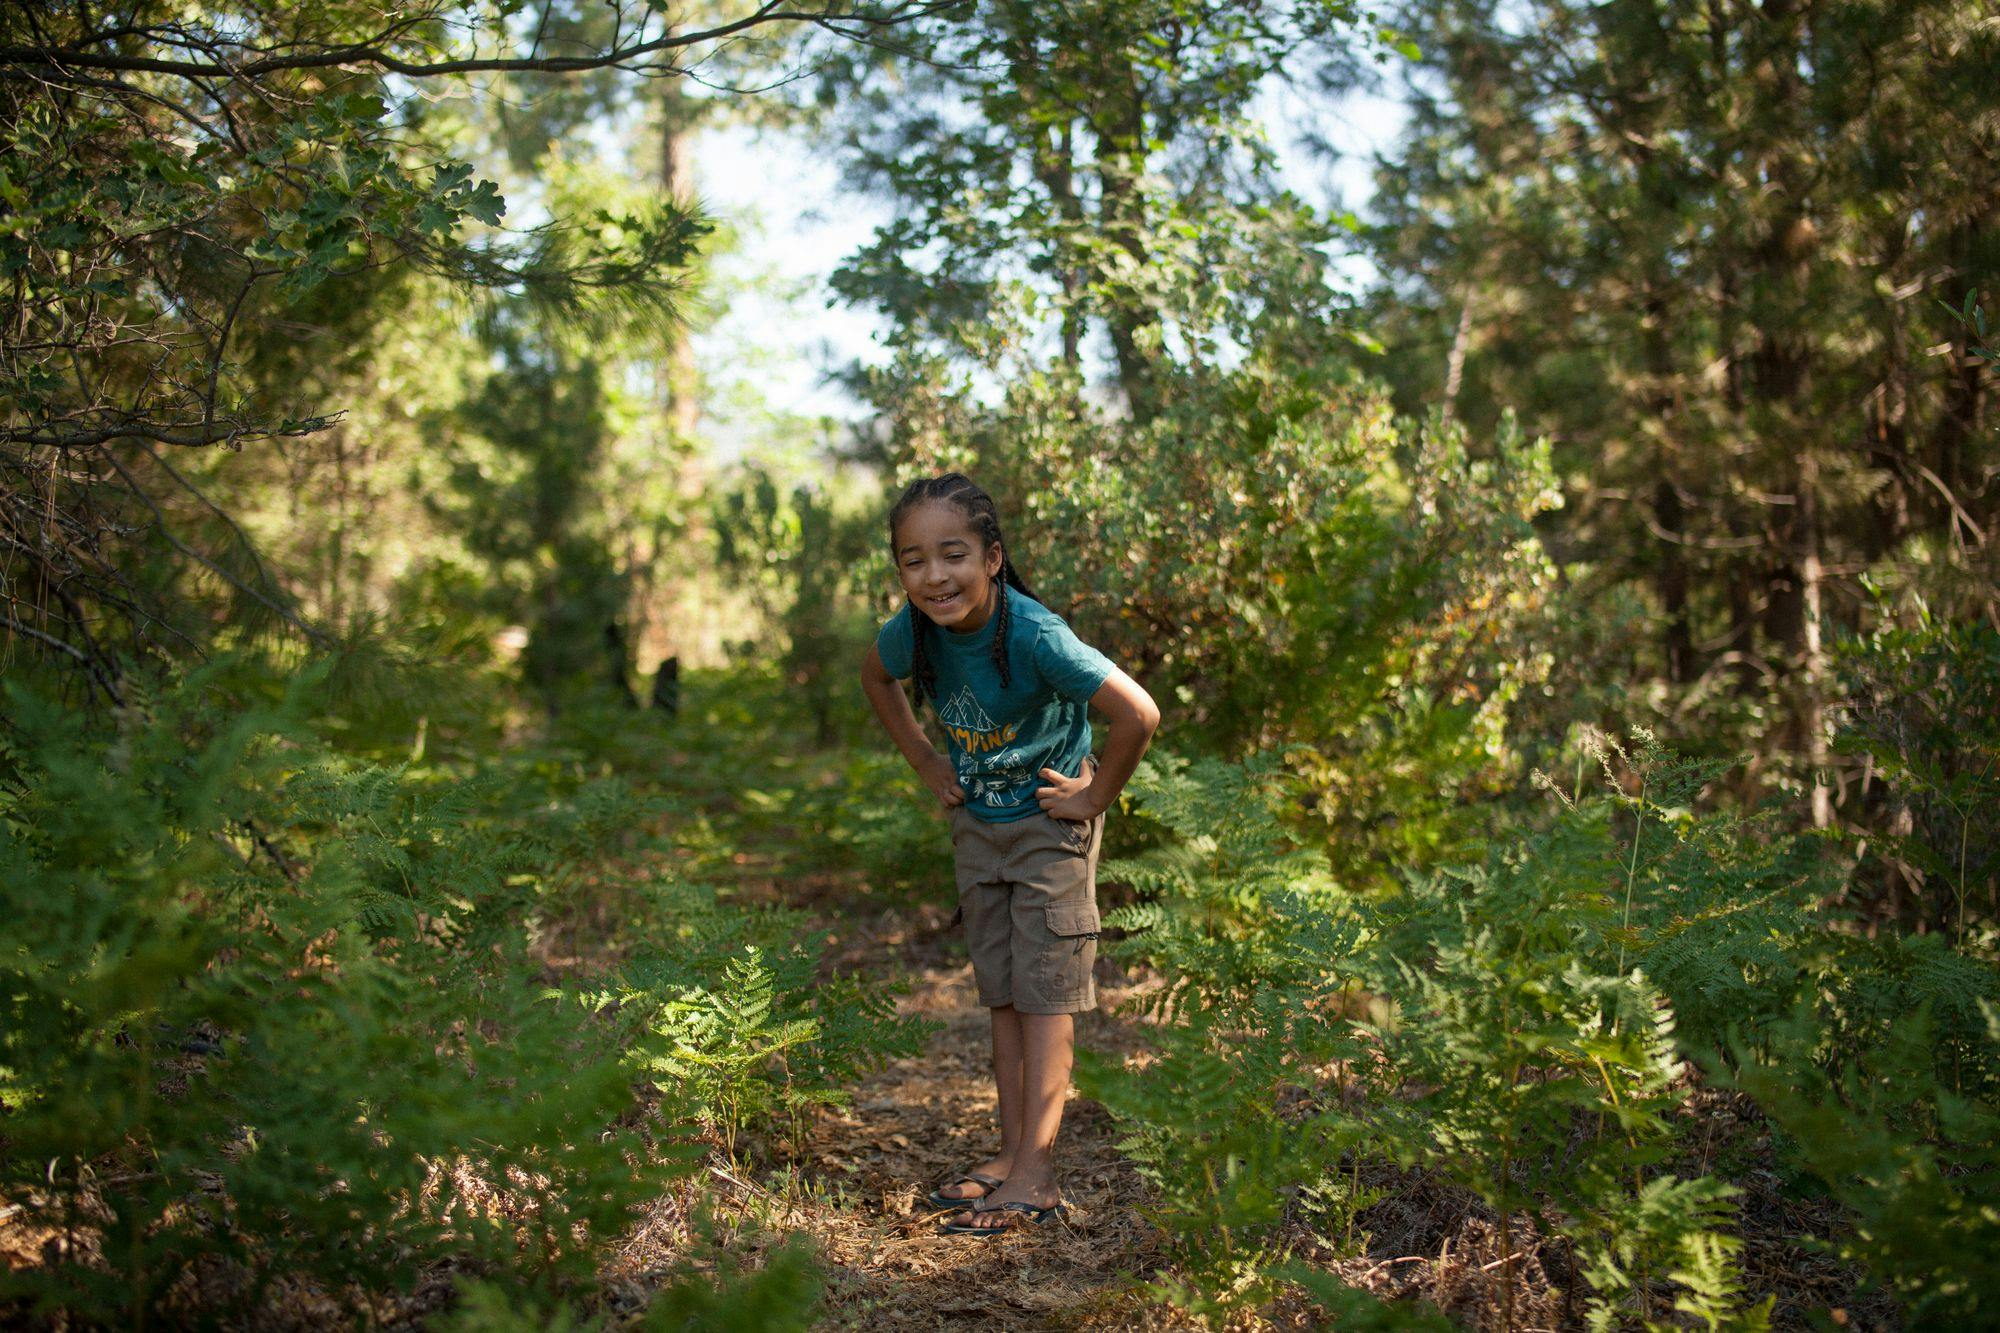 Living near woodland benefits children’s mental health, study finds